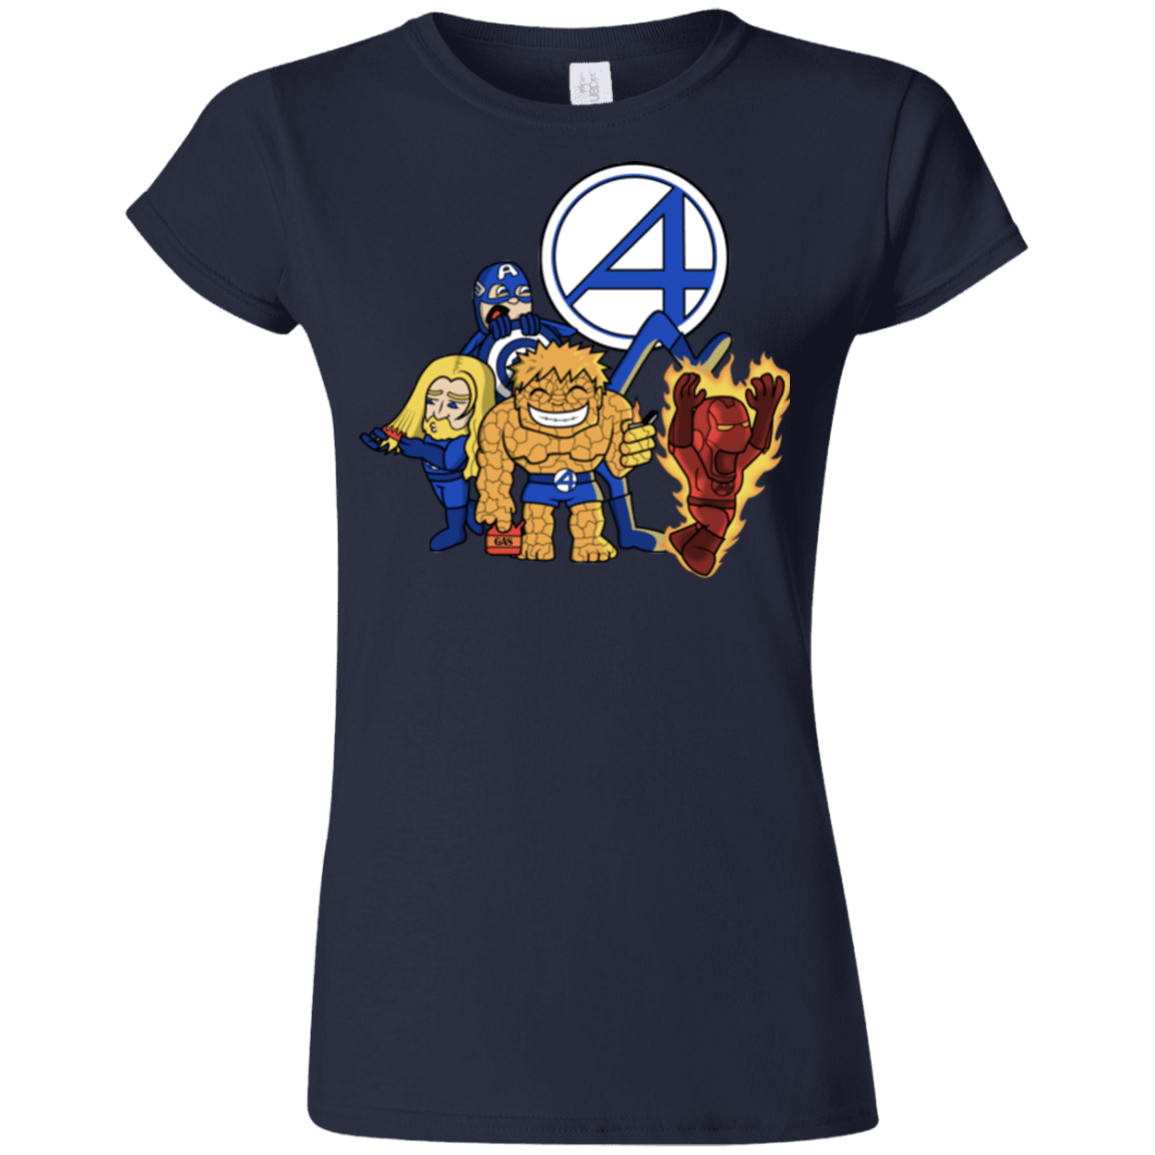 T-Shirts Navy / S FANTASTIC-A Junior Slimmer-Fit T-Shirt